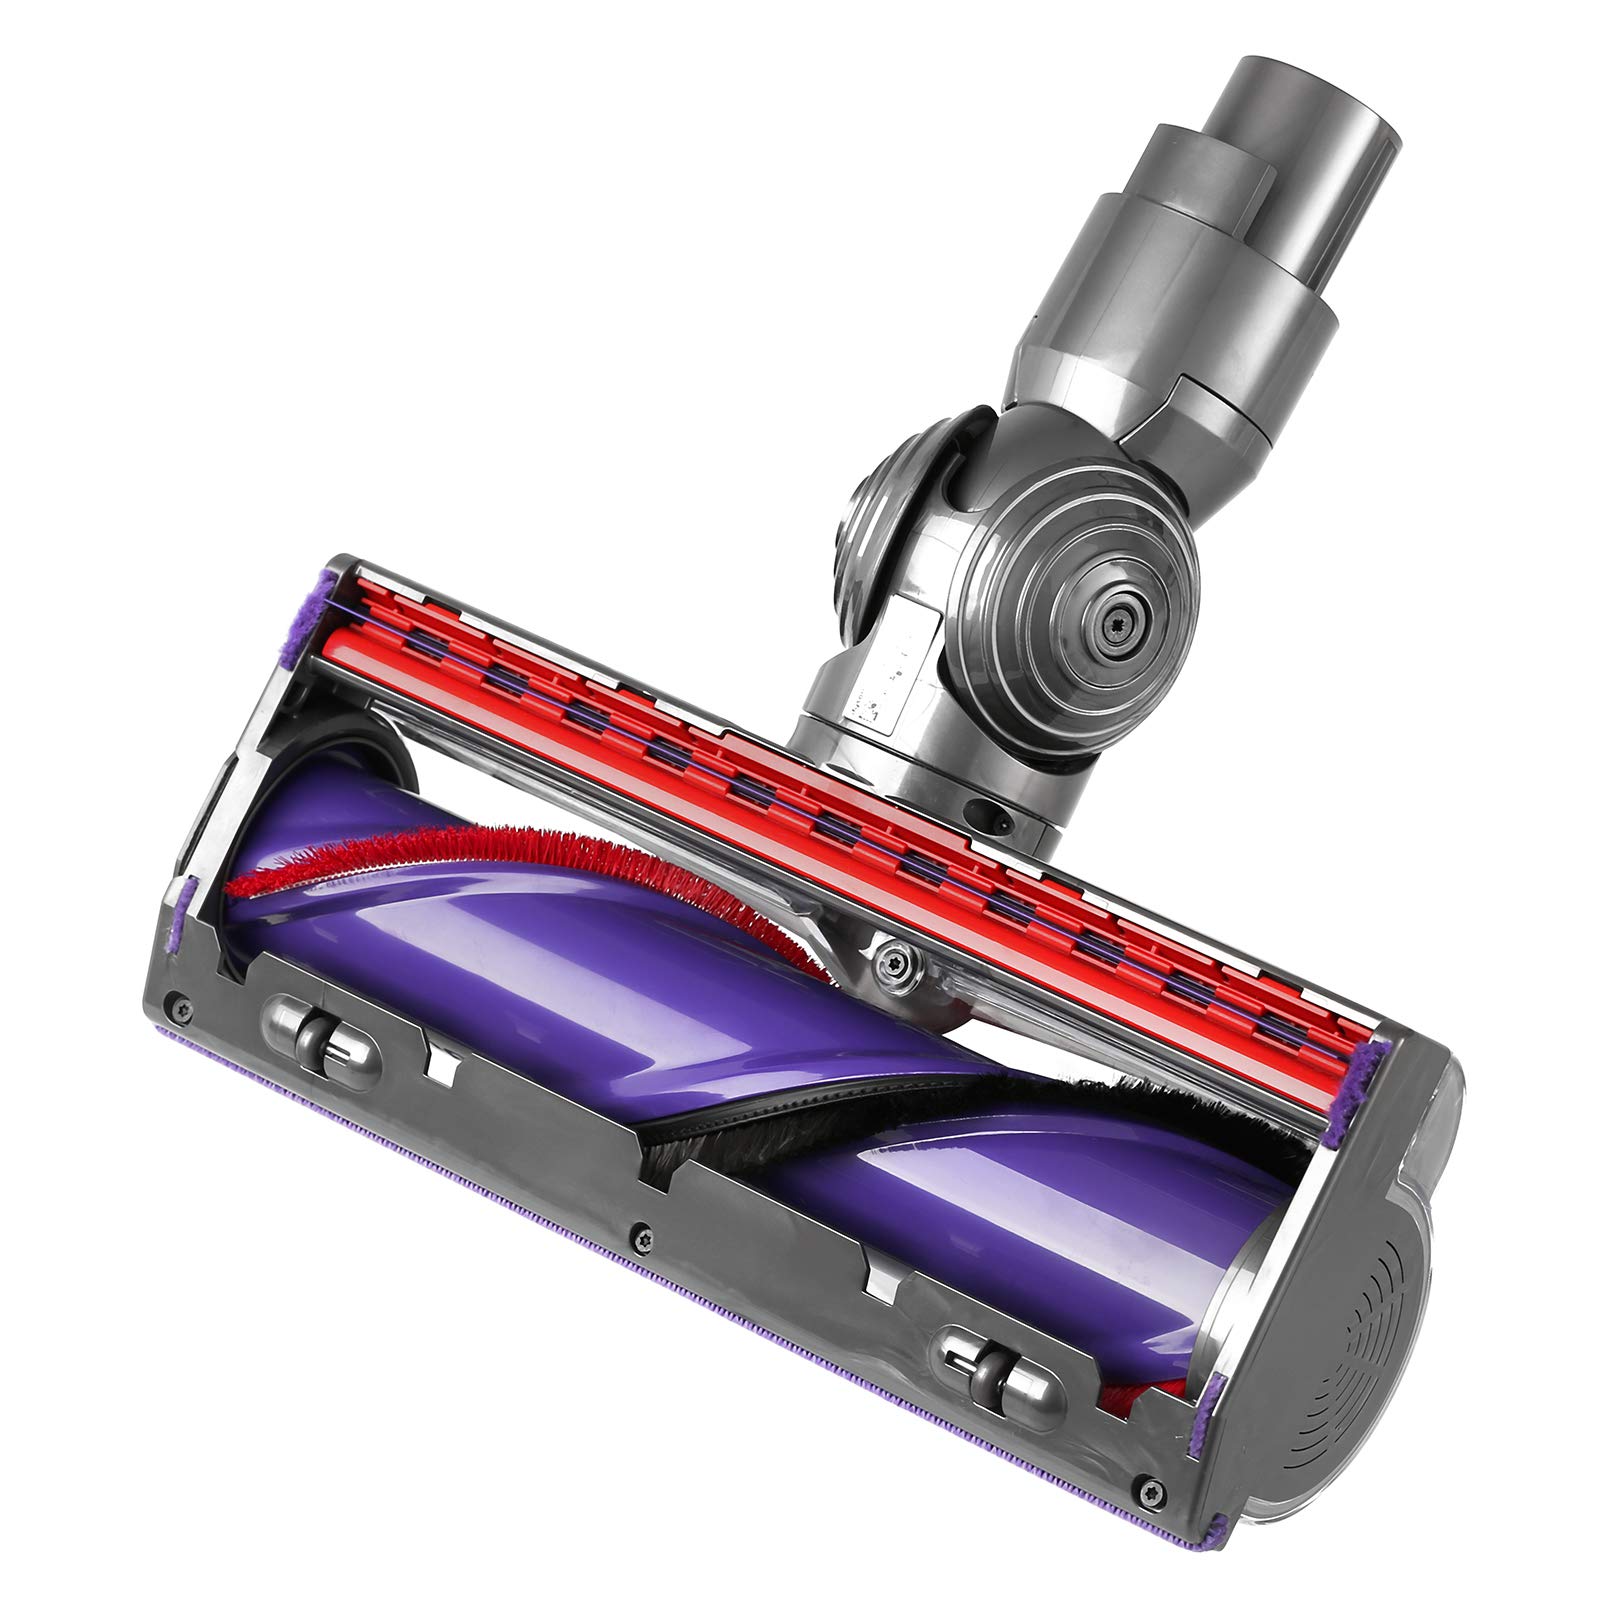 Dyson V10 V12 Cyclone Cordless Vacuum Cleaner Direct Drive Cleaner Head Turbine Floor Tool, Grey & Purple